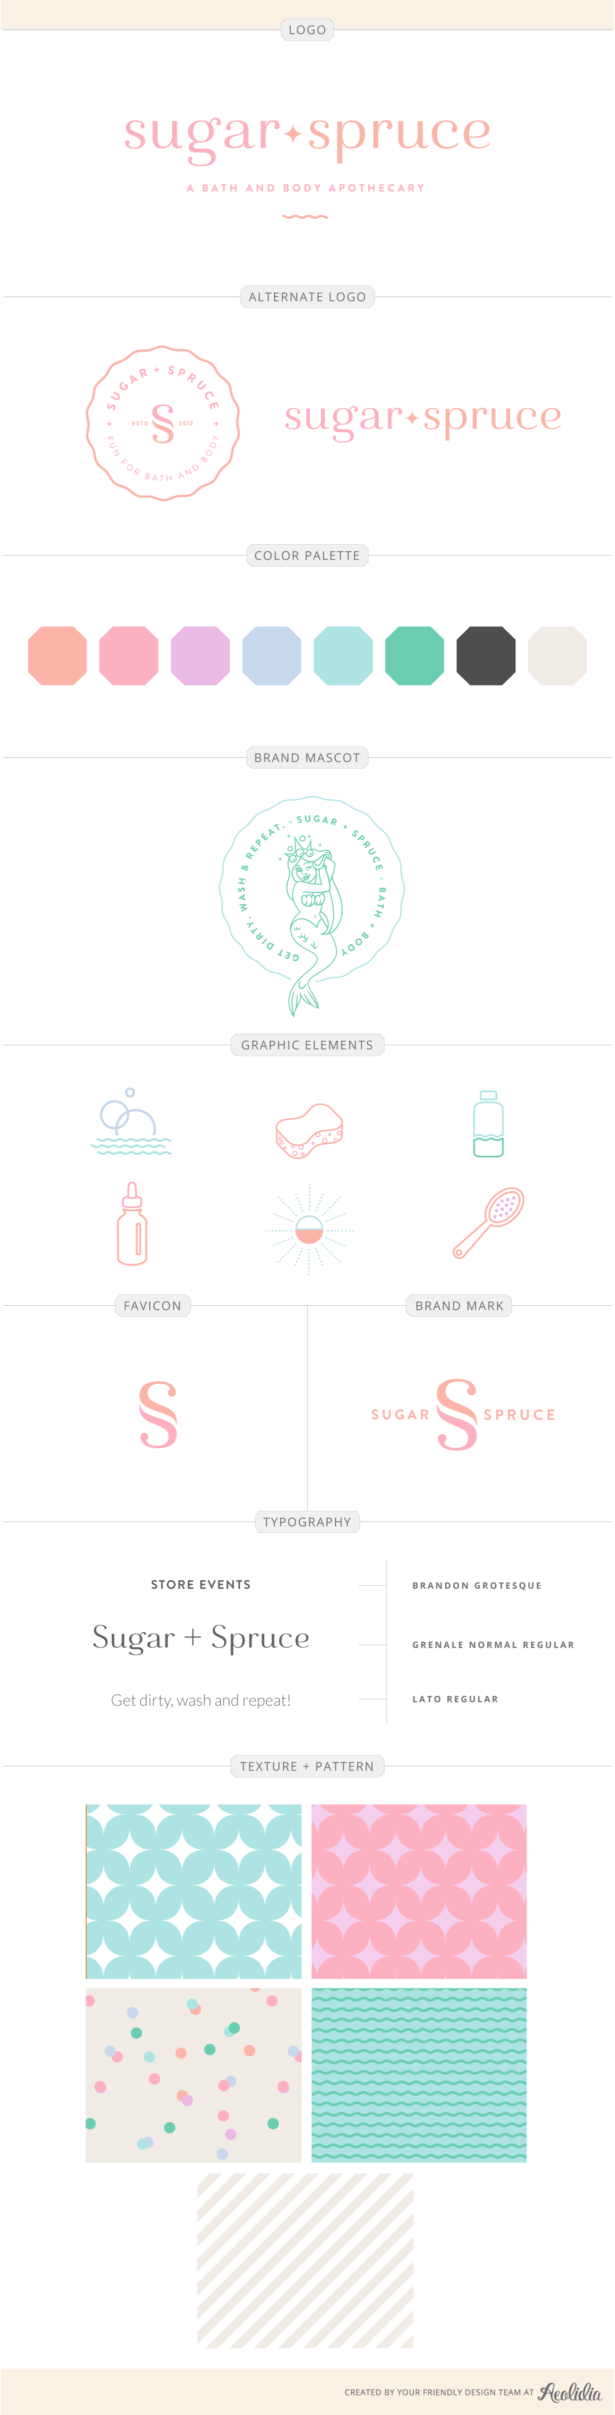 Sugar + Spruce logo design for a bath and body apothecary